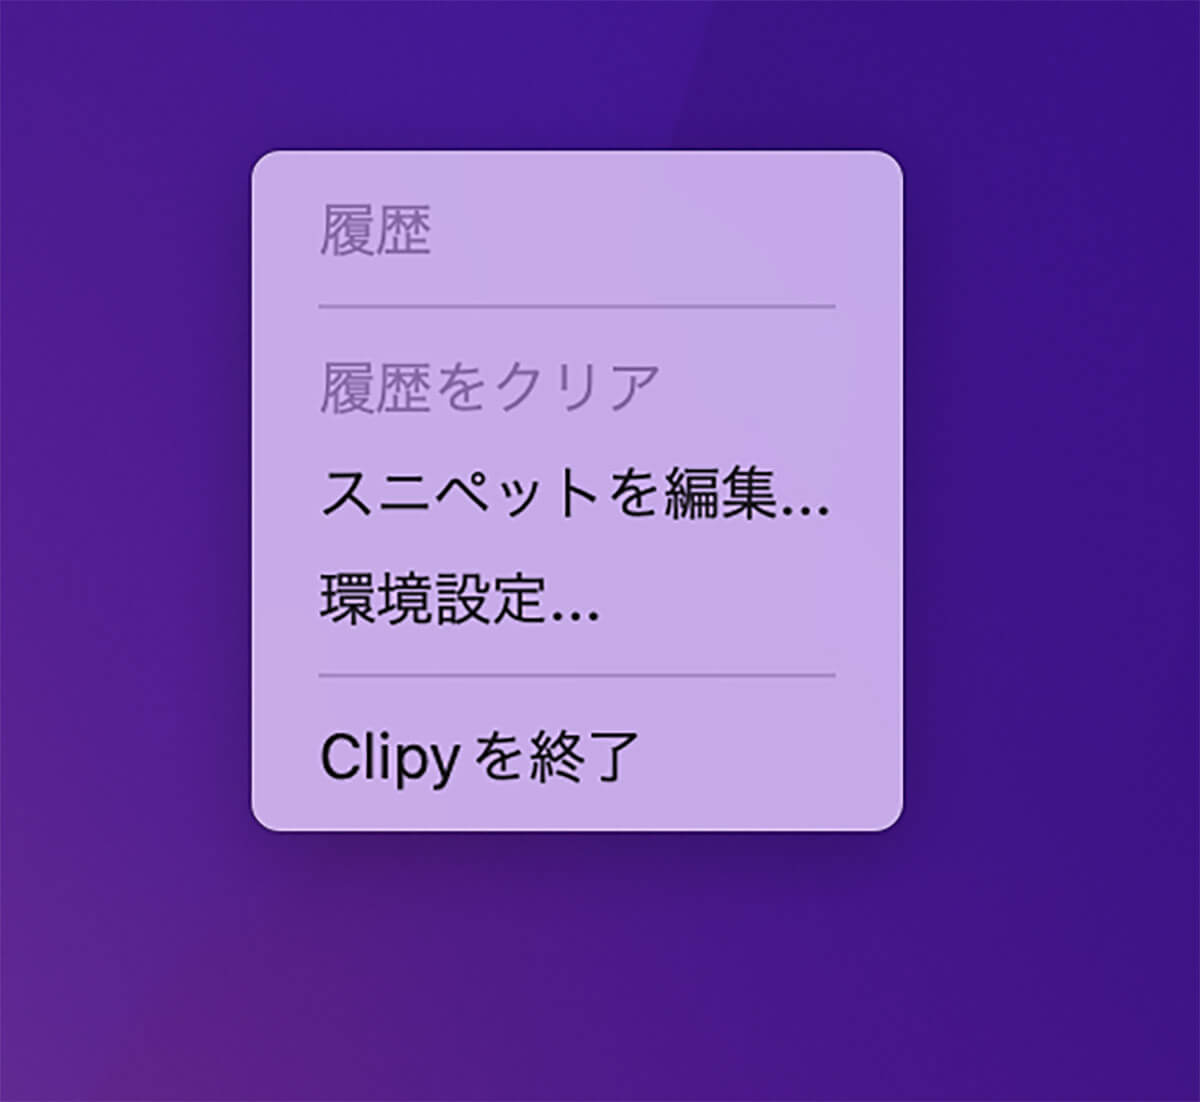 【Mac】「Clipy」の使い方1 Clipyを起動/呼び出す方法